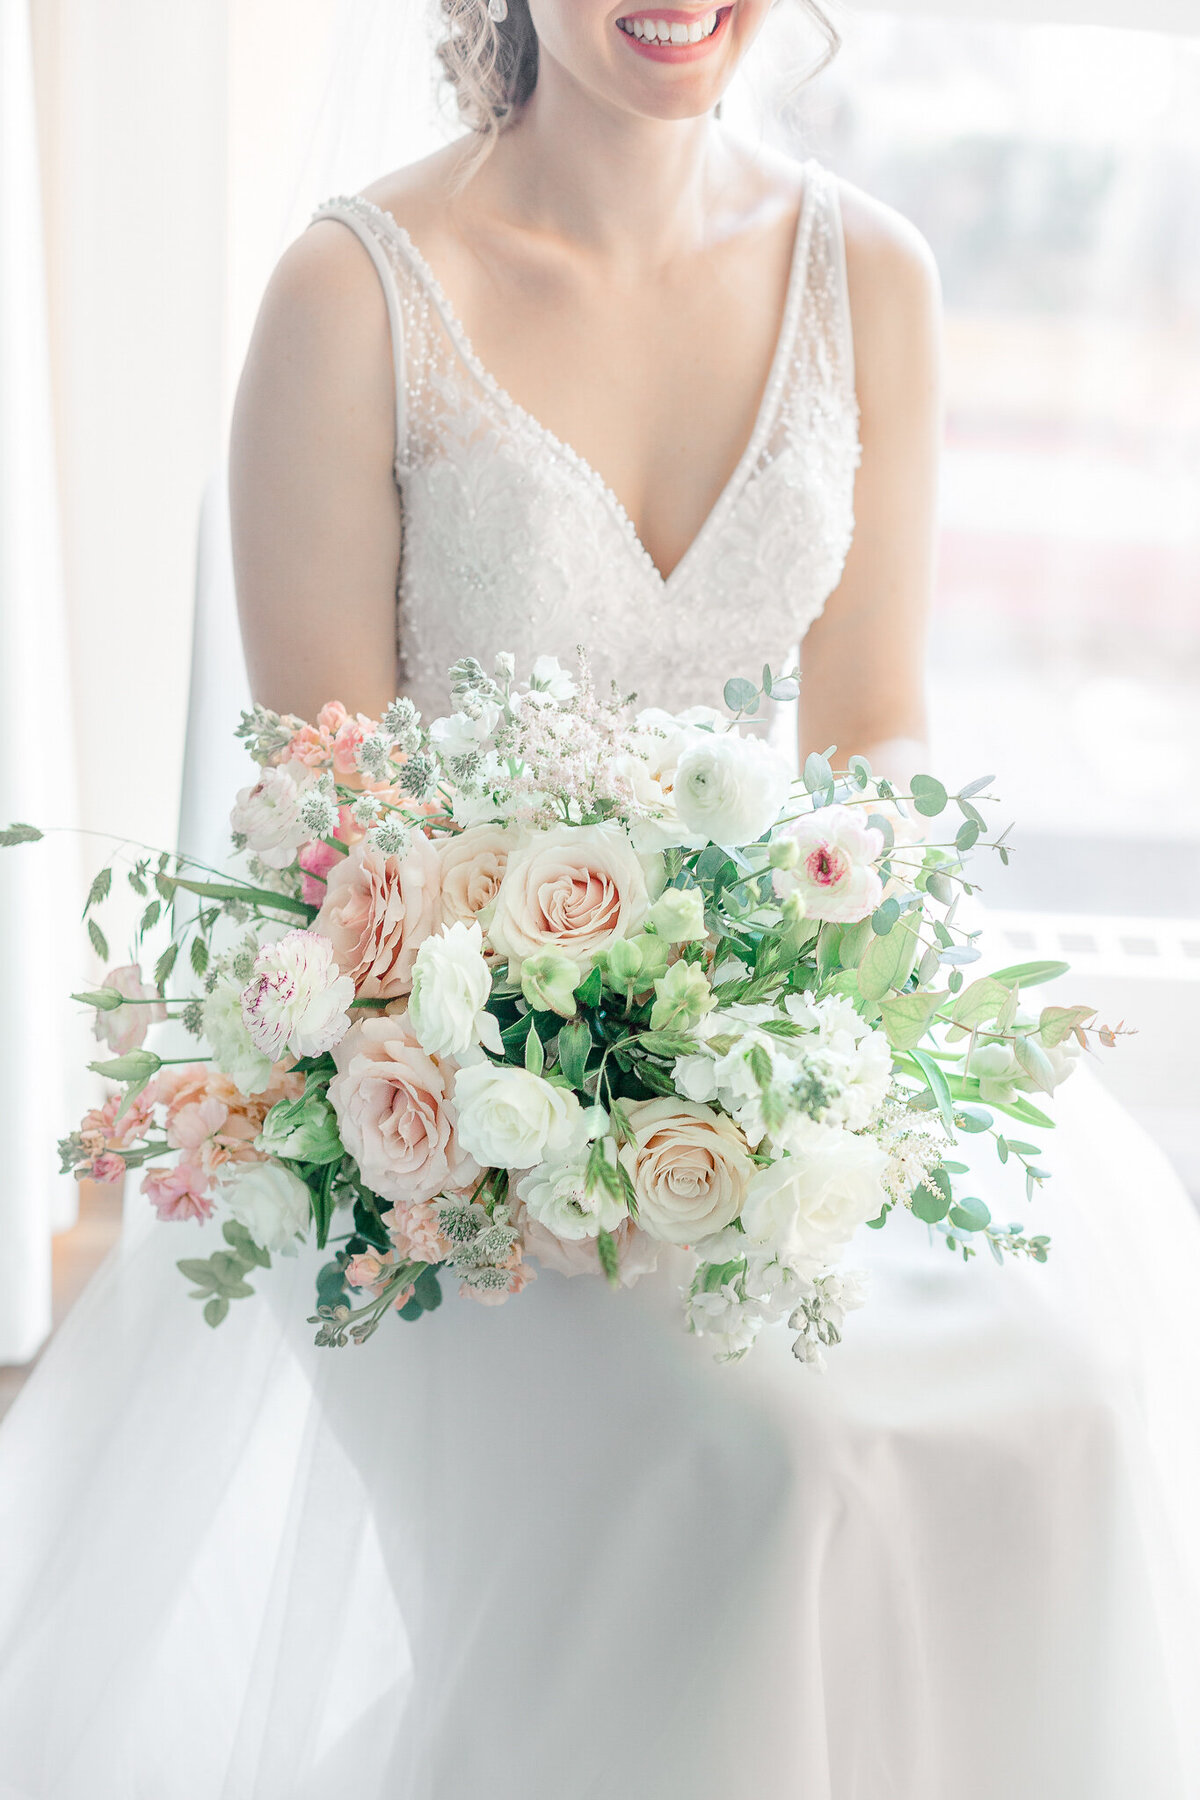 Atelier-Carmel-Wedding-Florist-GALLERY-Bridal-47